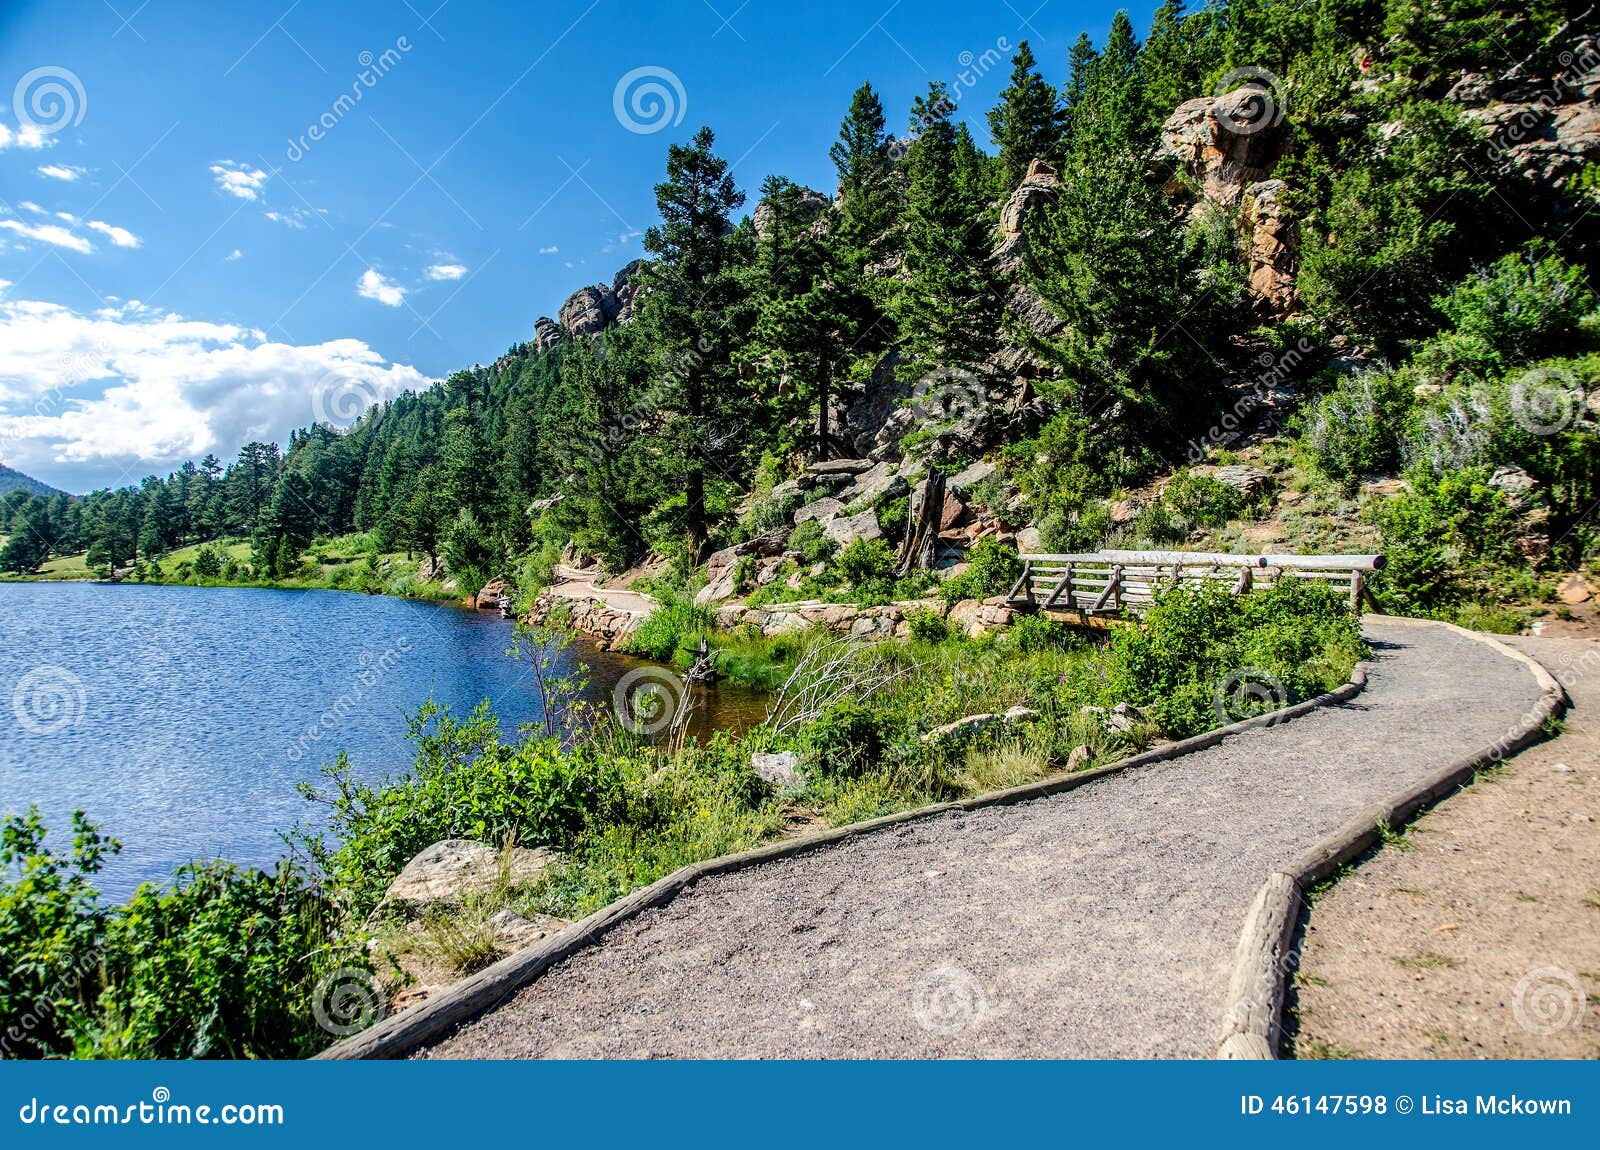 lily lake rocky mountain national park colorado trail